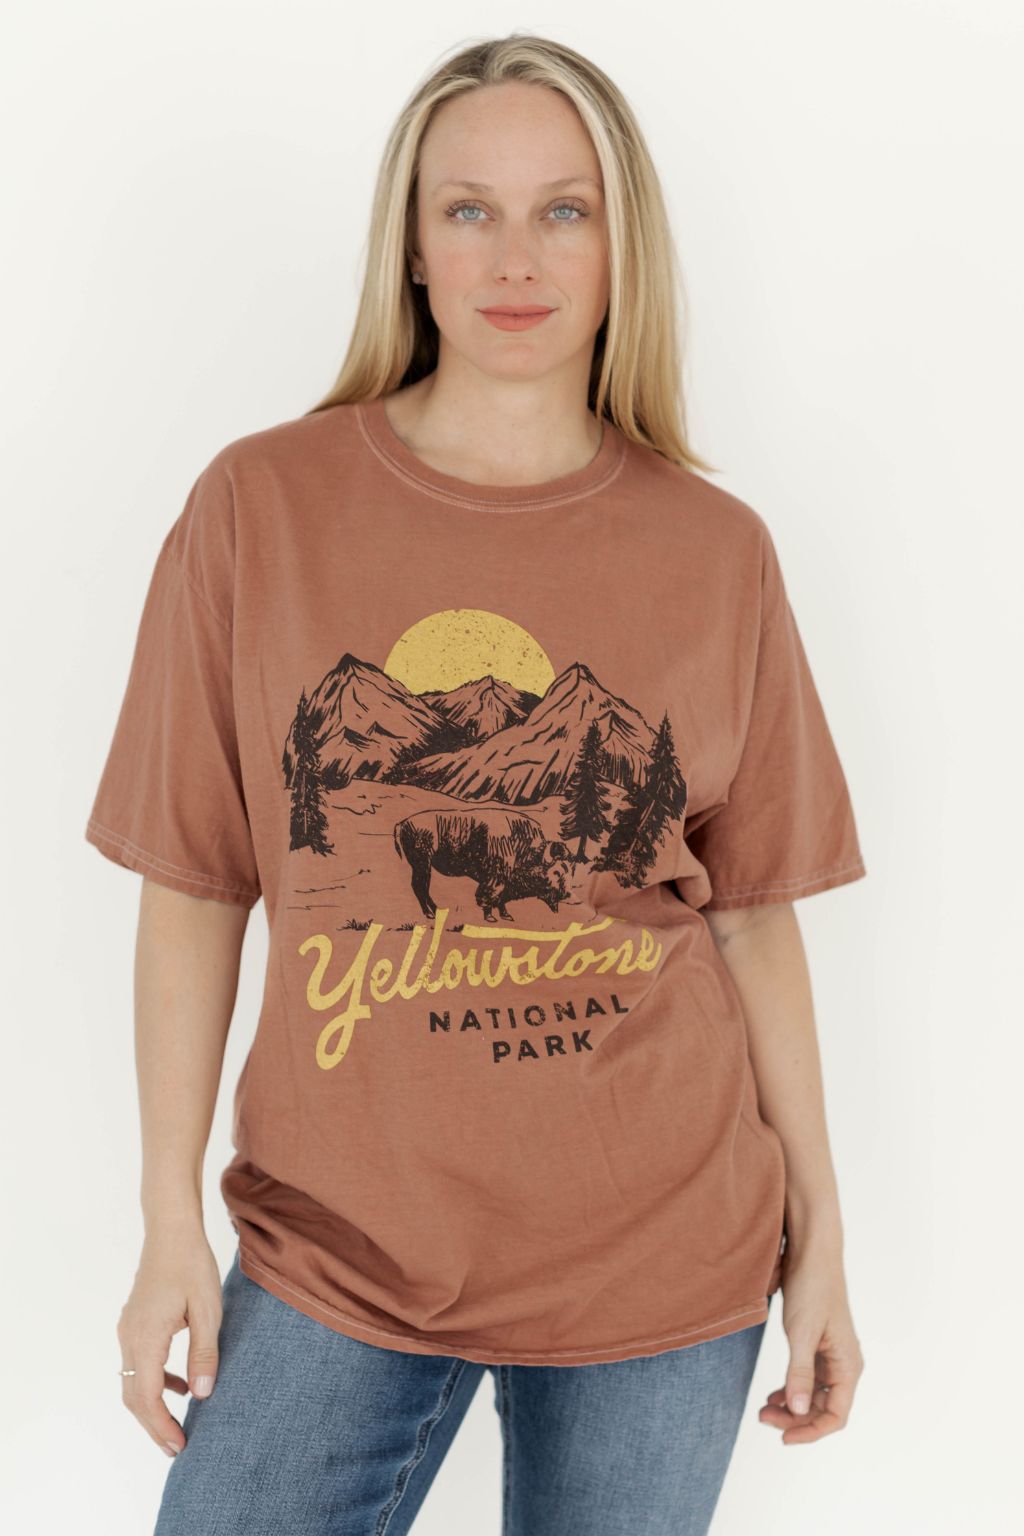 Yellowstone National Park Graphic Tee